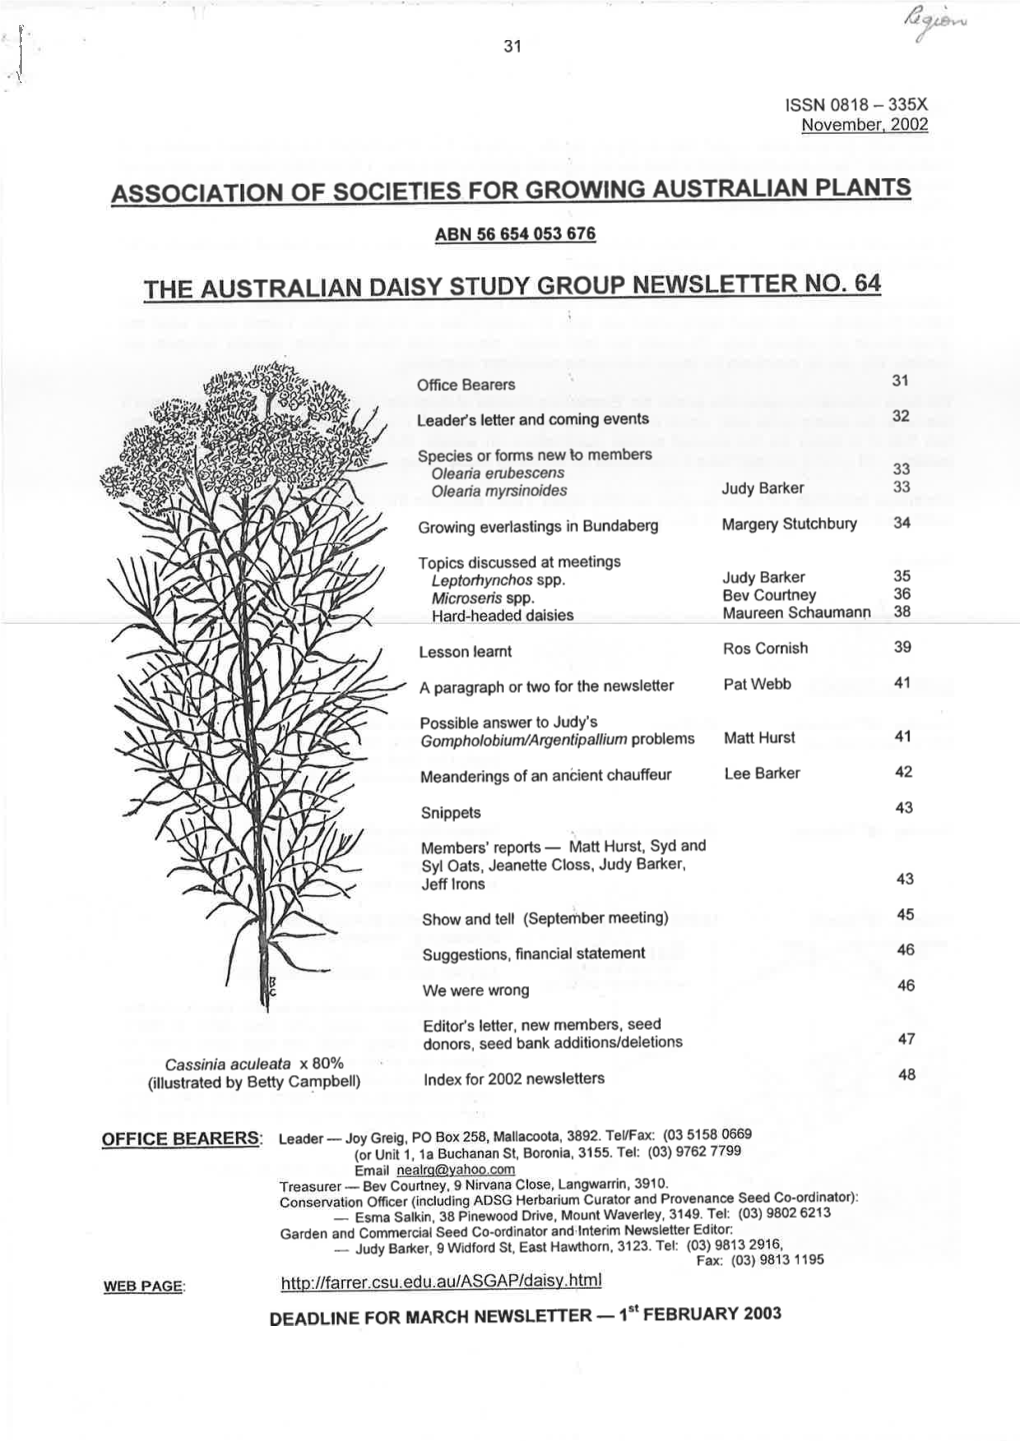 Association of Societies for Growing Australian Plants